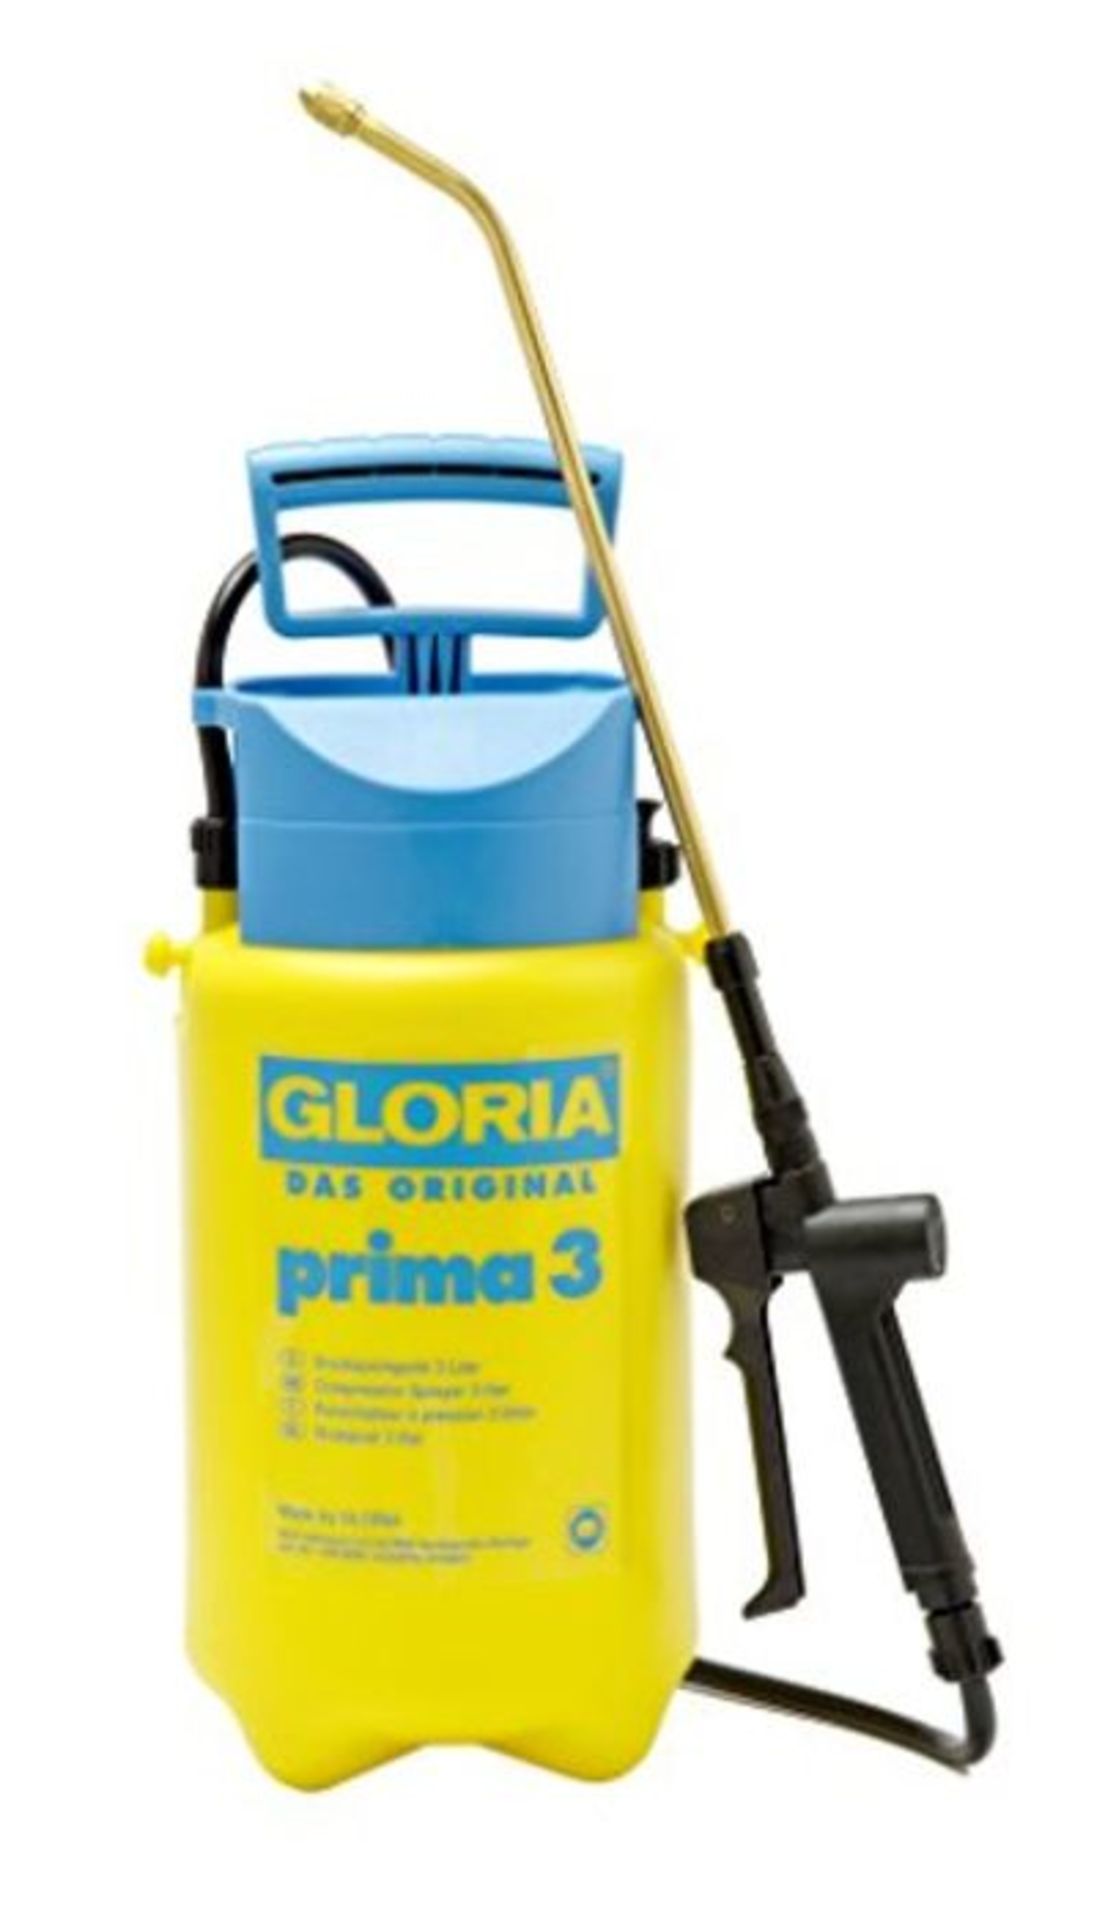 GLORIA Prima 3 Pressure Sprayer | Garden Sprayer | 3 Litre Capacity | Adjustable Brass